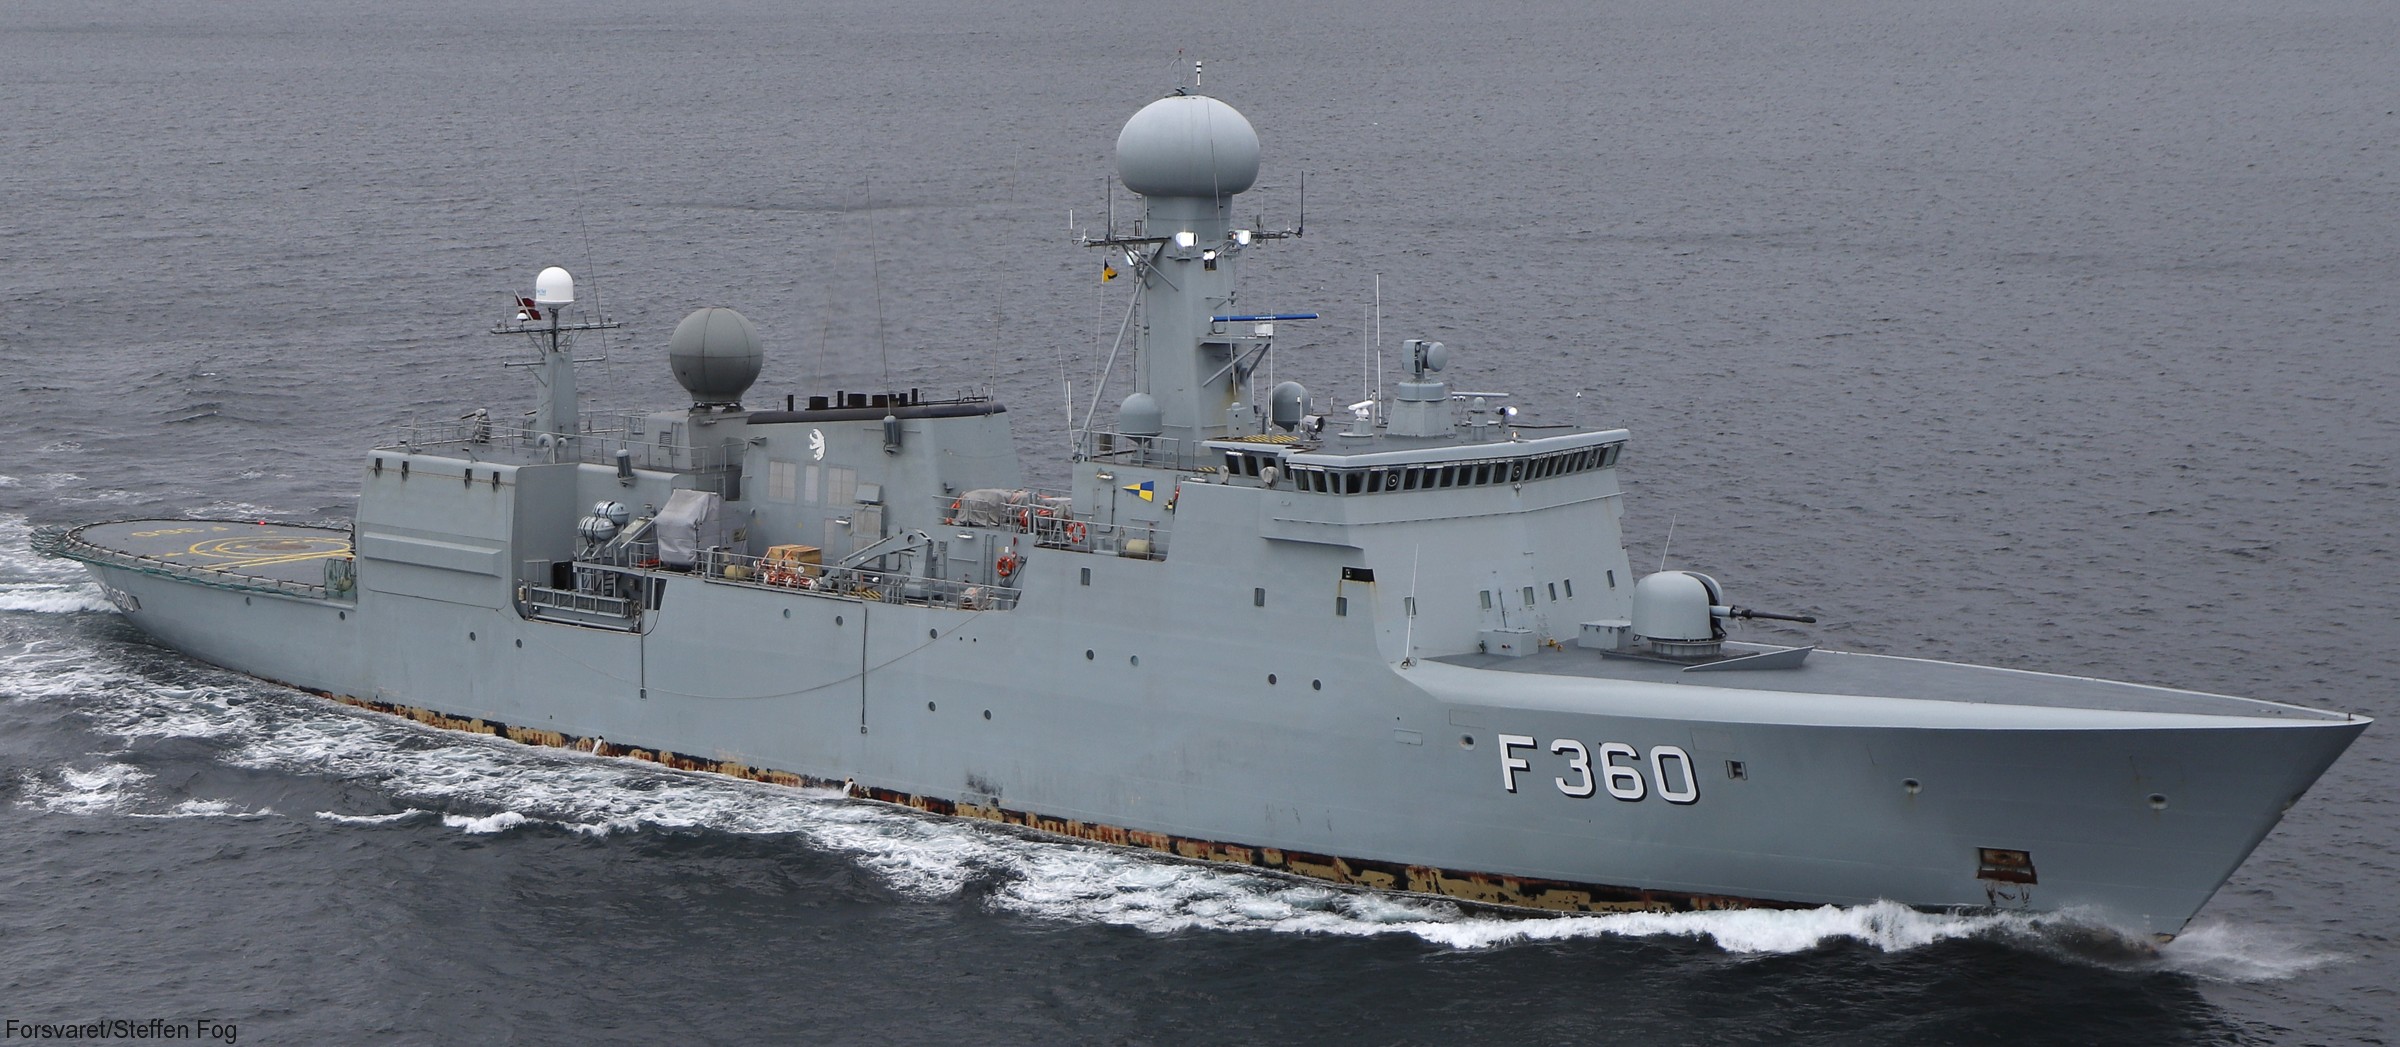 f-360 hdms hvidbjornen thetis class ocean patrol frigate royal danish navy kongelige danske marine kdm inspektionsskibet 03